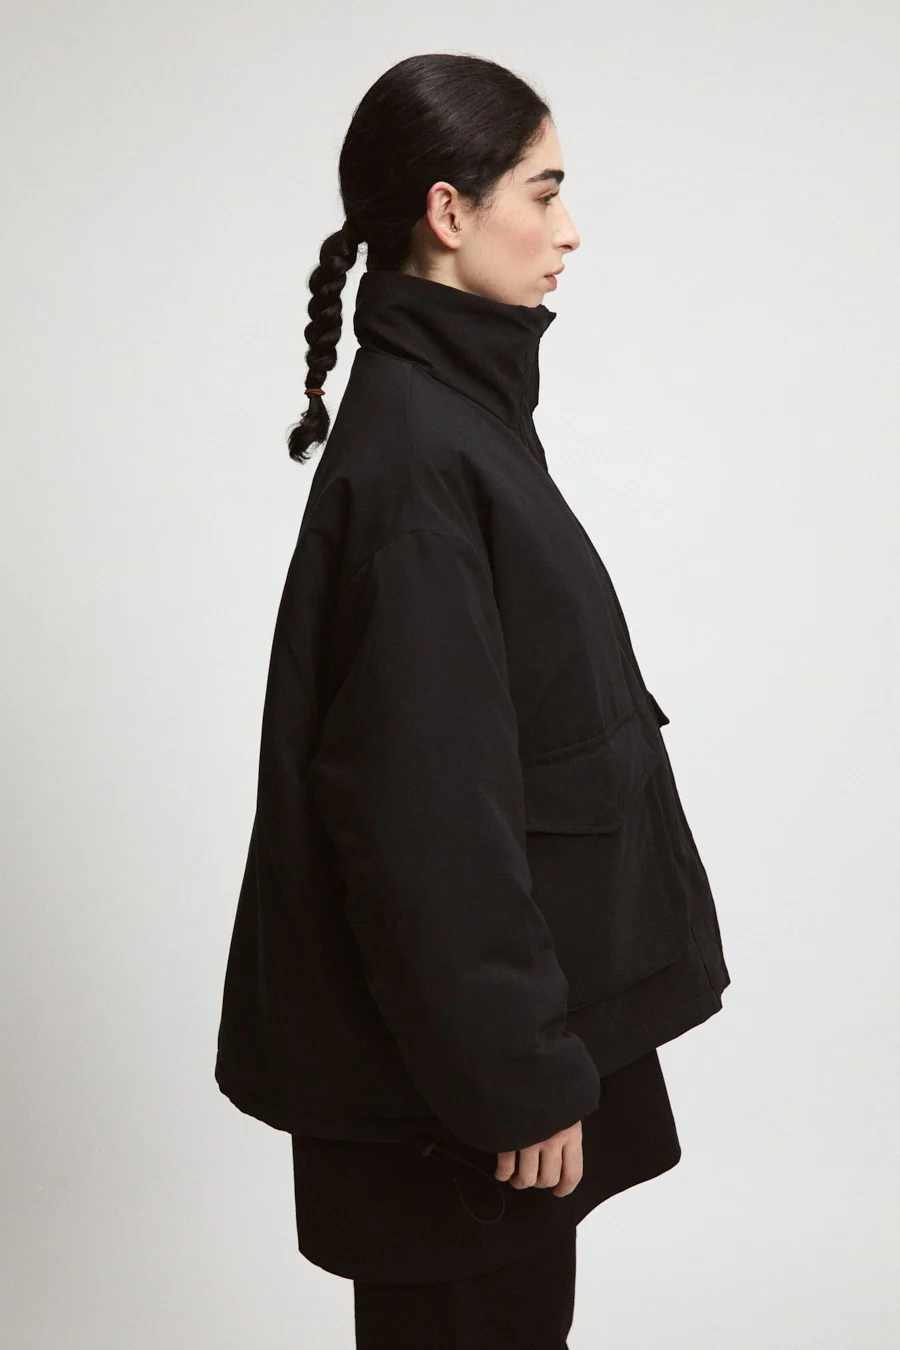 RITA ROW - Hardin Puffer Jacket - Black 4